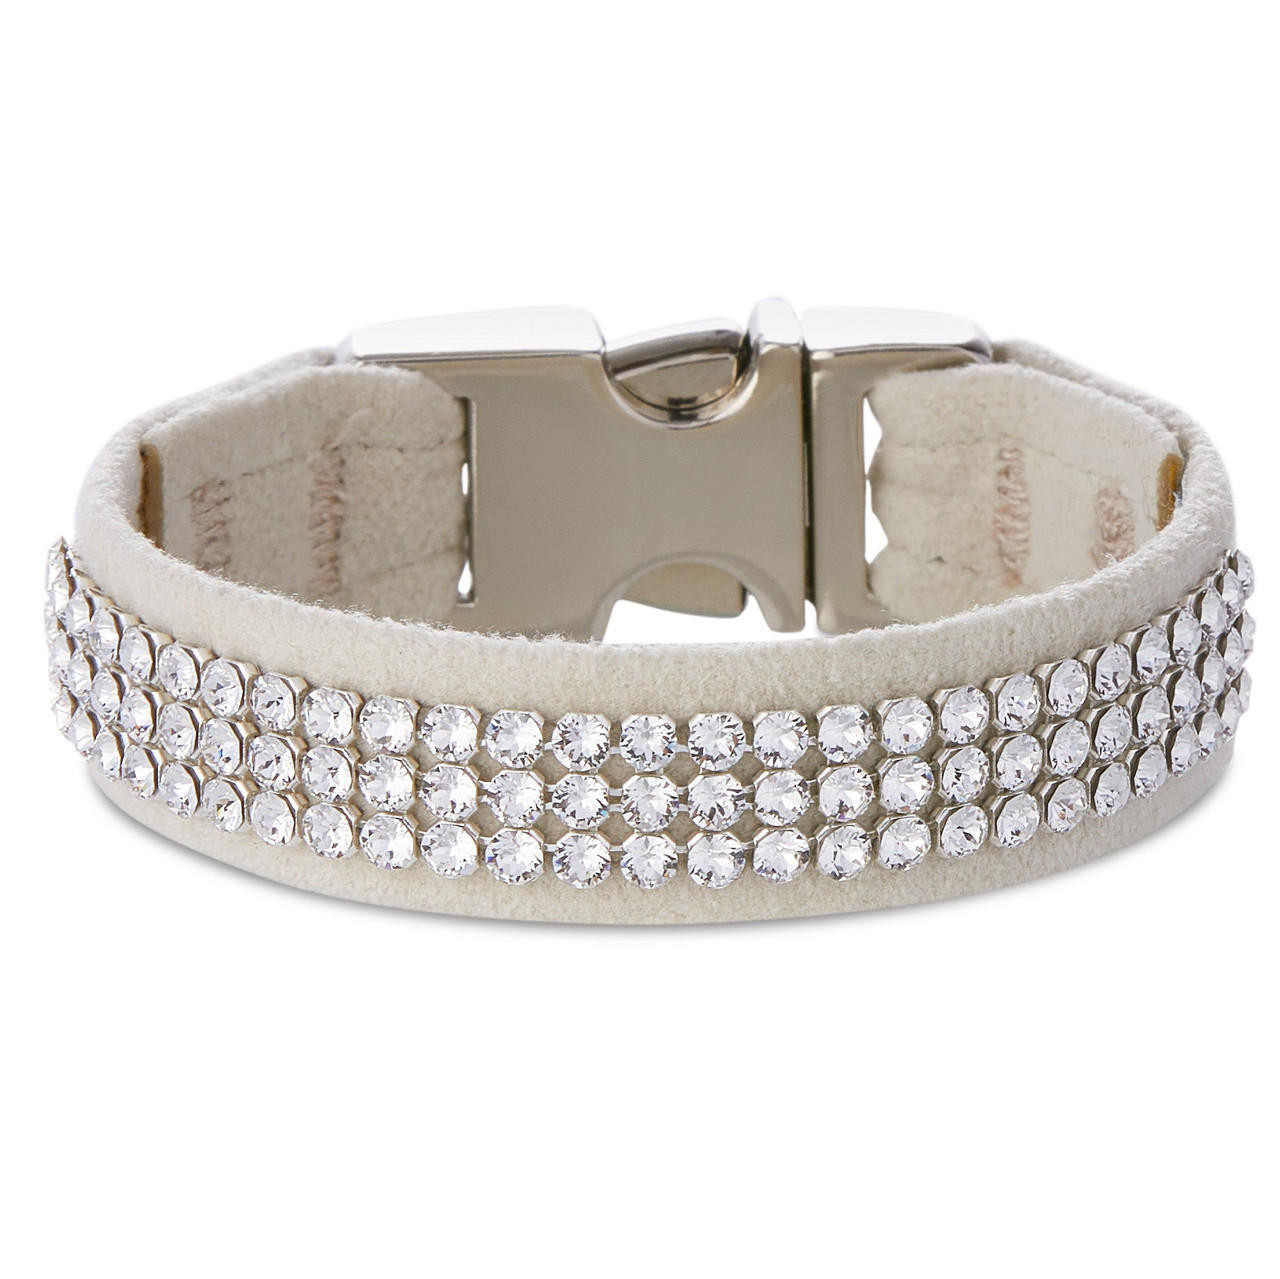  Susan Lanci 3 Row Giltmore Bracelet (matches collar) 